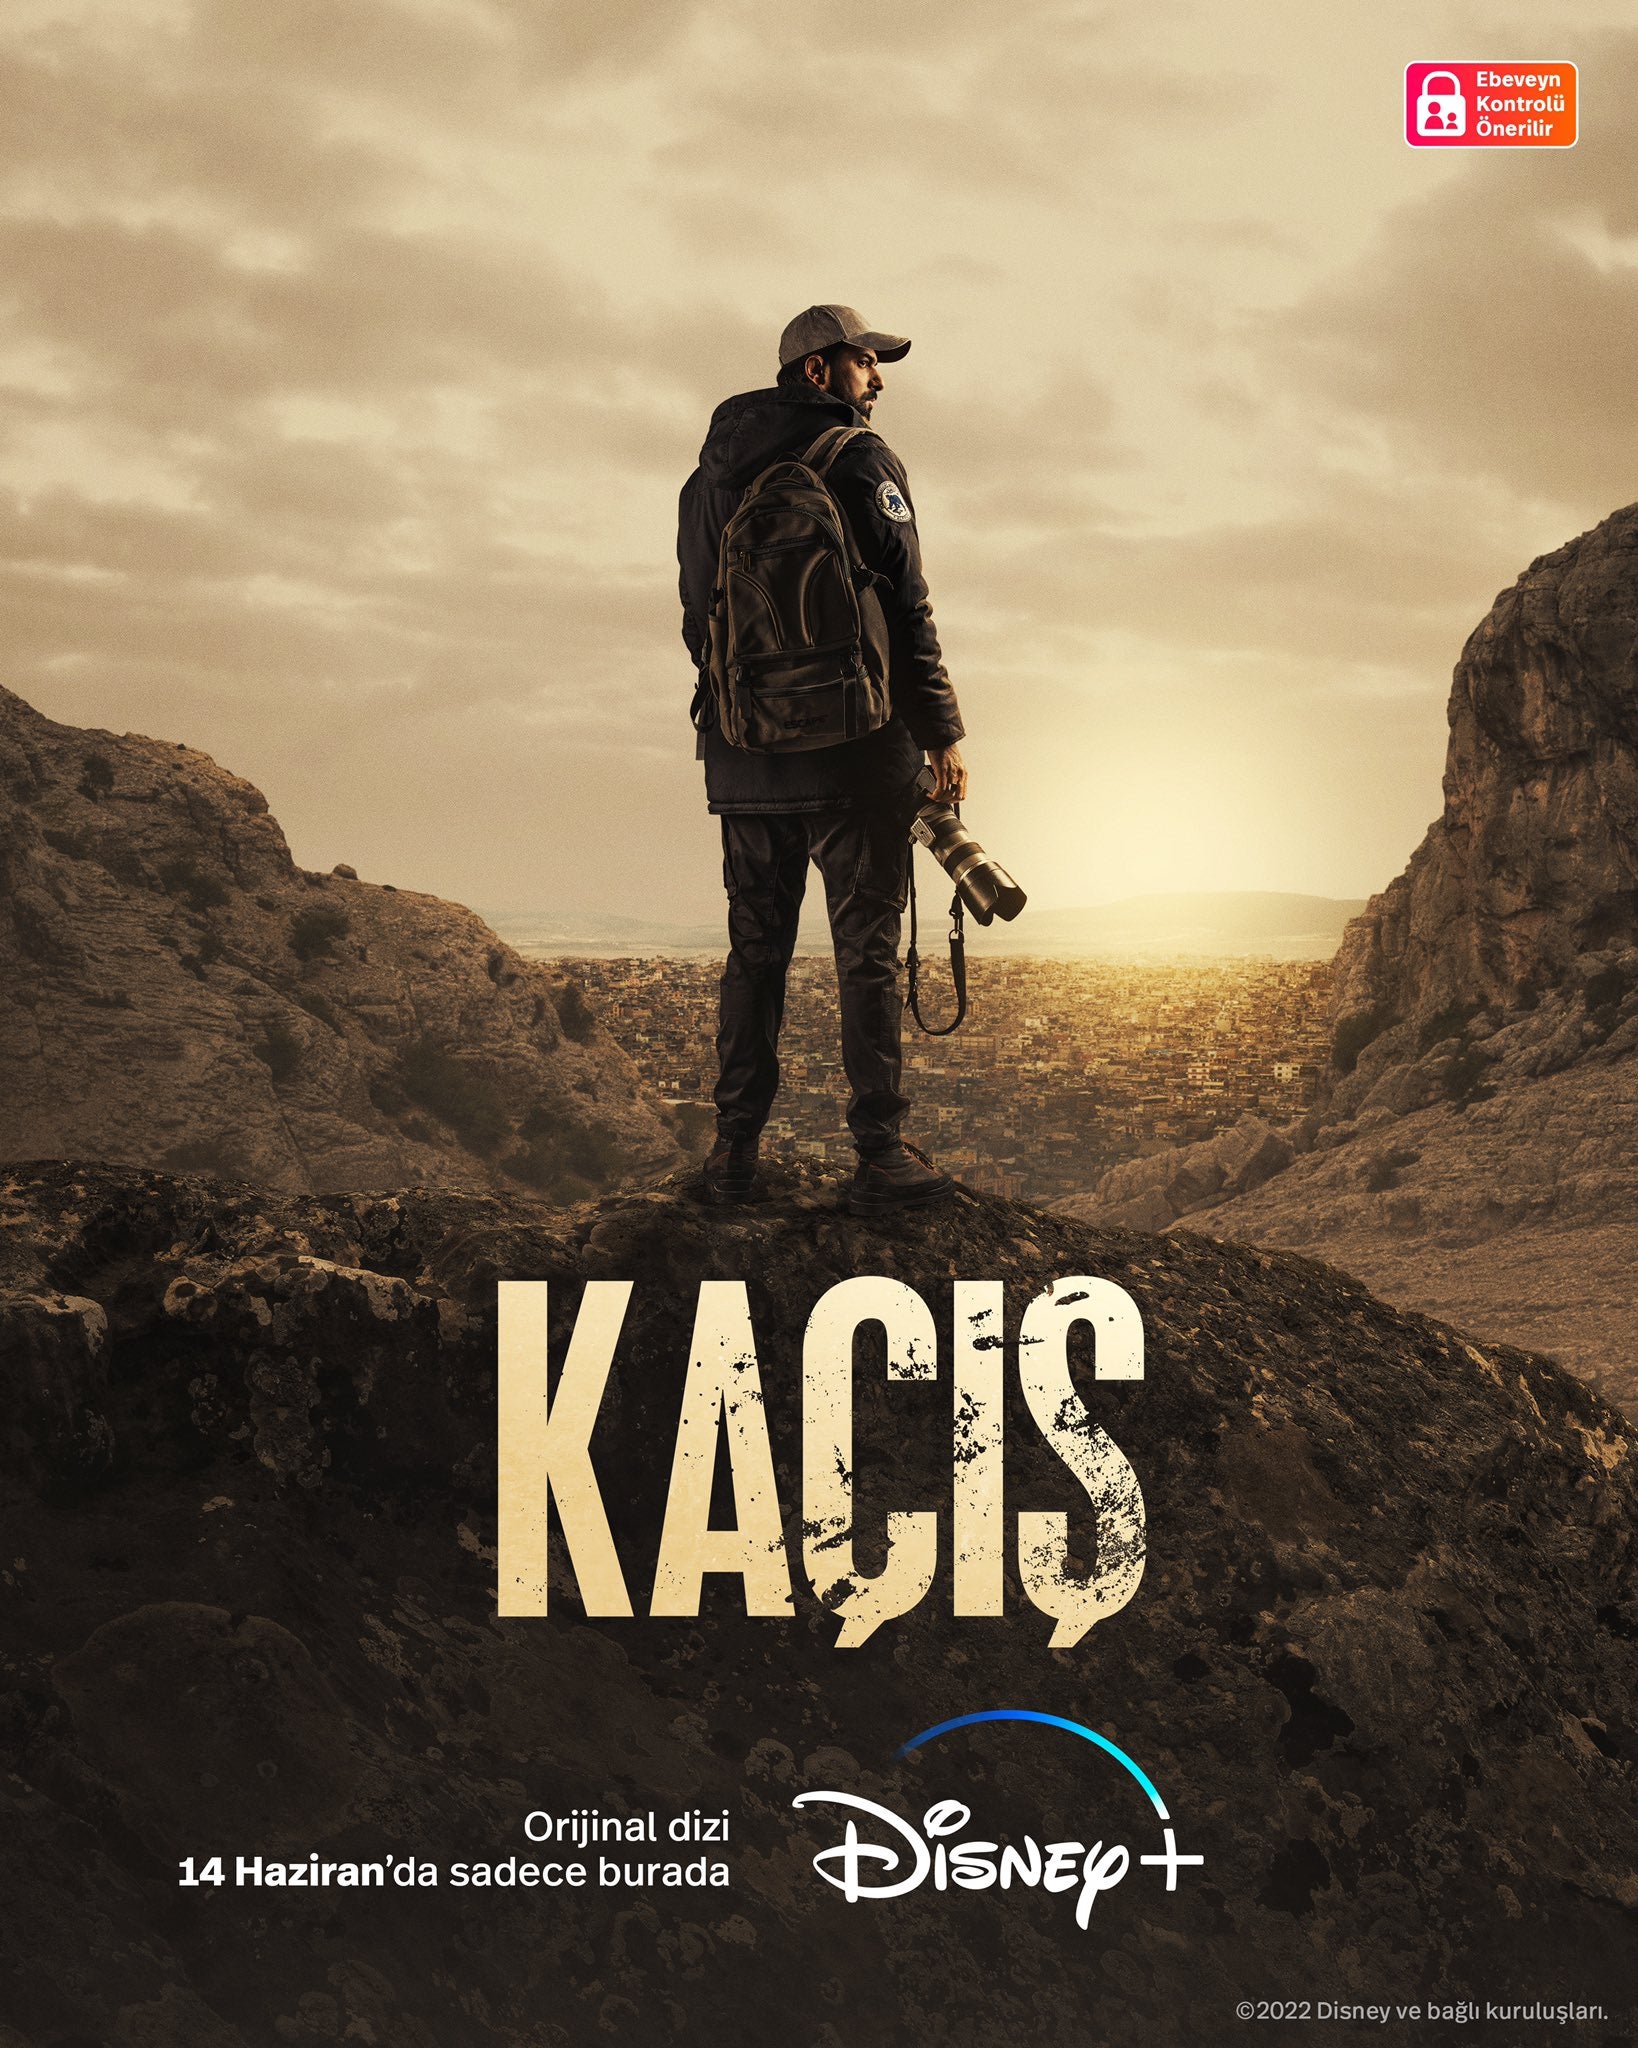 TV ratings for Escape (Kaçış 2022) in Mexico. Disney+ TV series